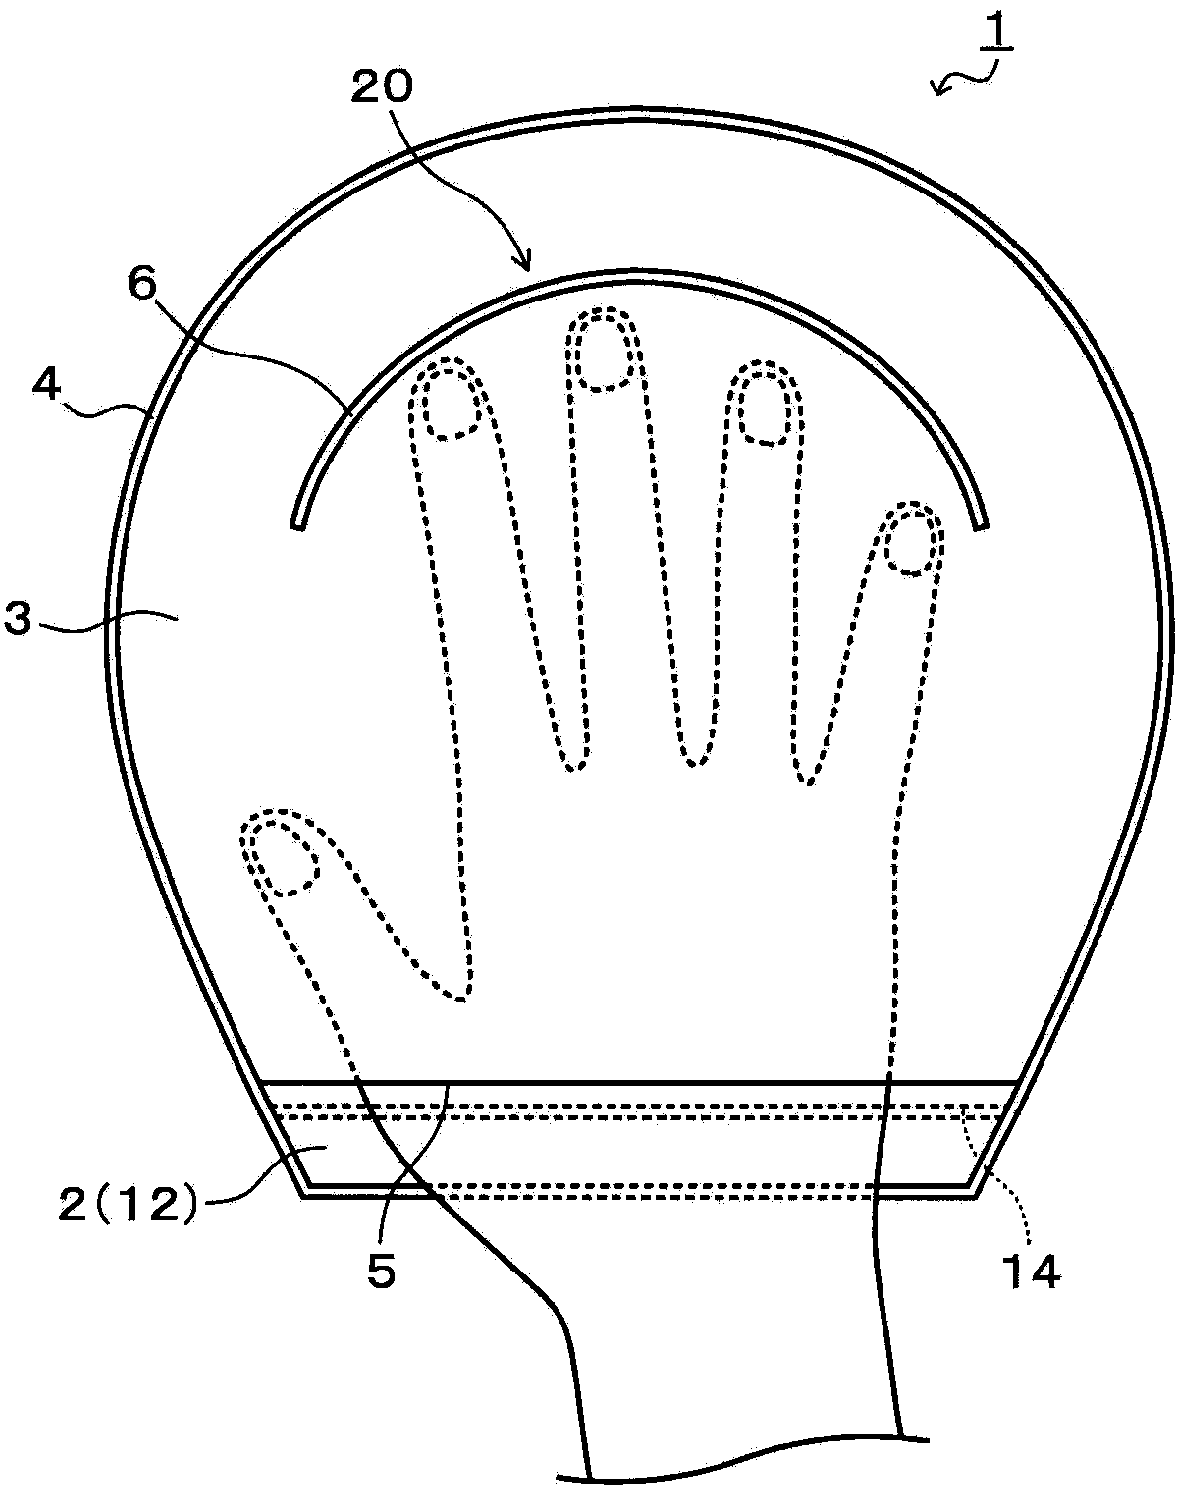 Touch perception sensitising glove